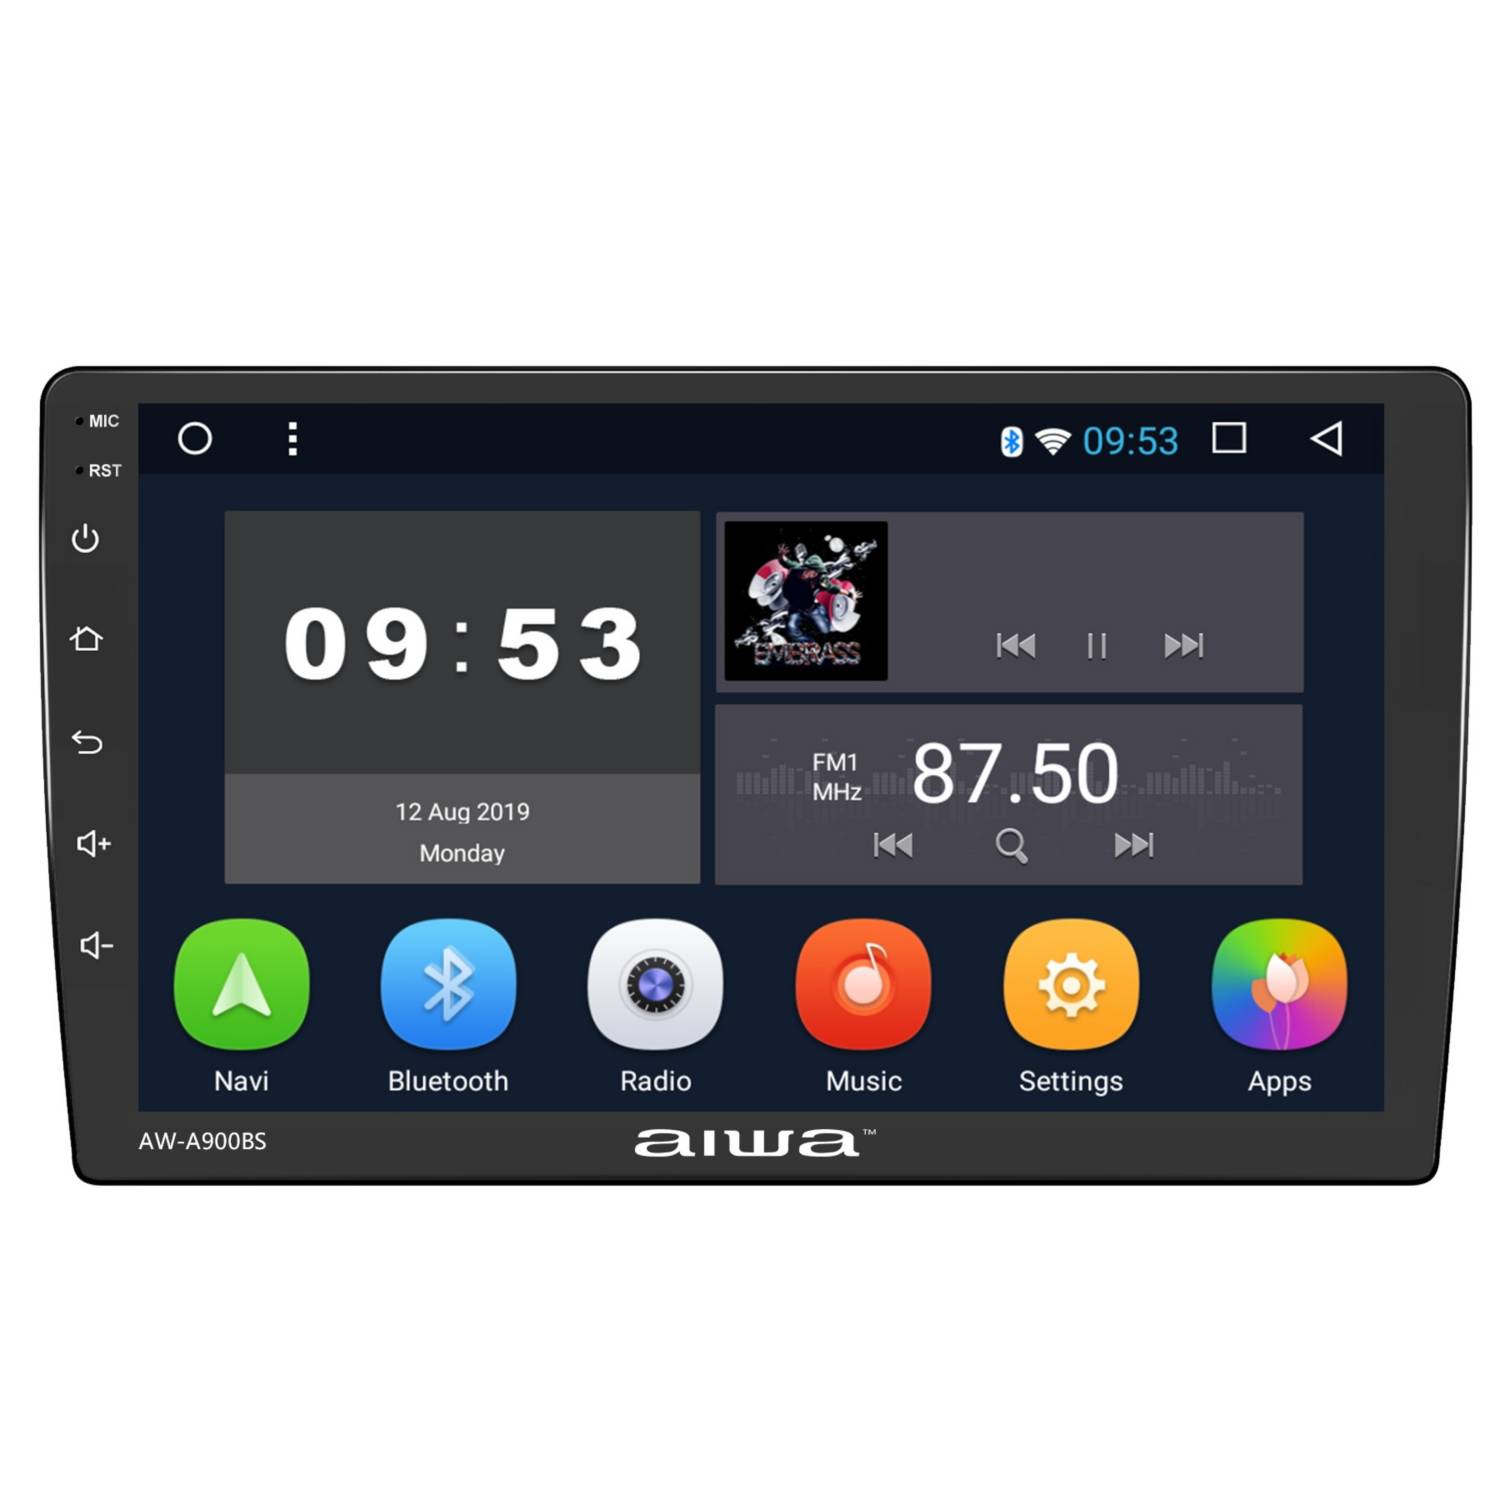 Radio Carro Pantalla 4 Bluetooth Mirrorlink Android Aiwa AW-W440BT